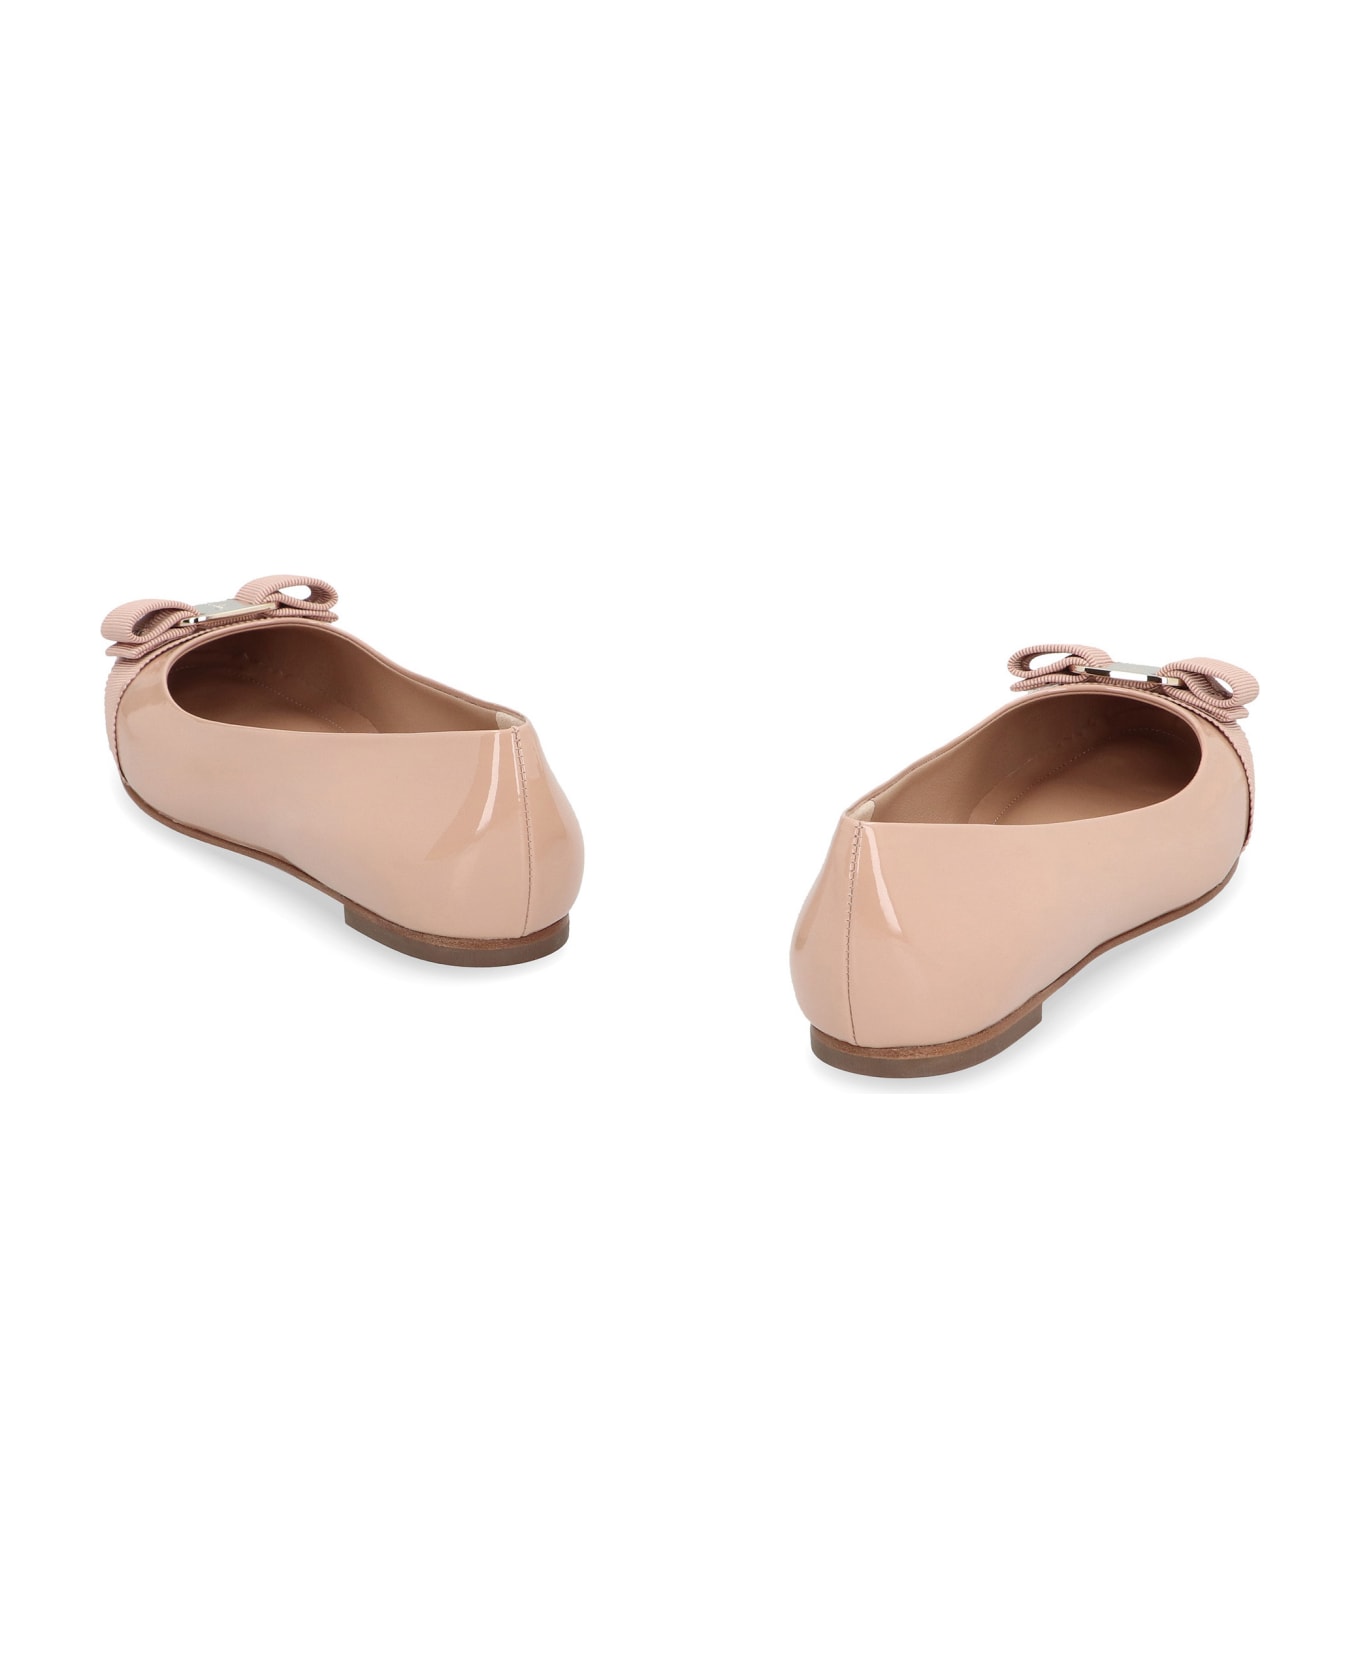 Ferragamo Varina Patent Leather Ballet Flats - Amaretti